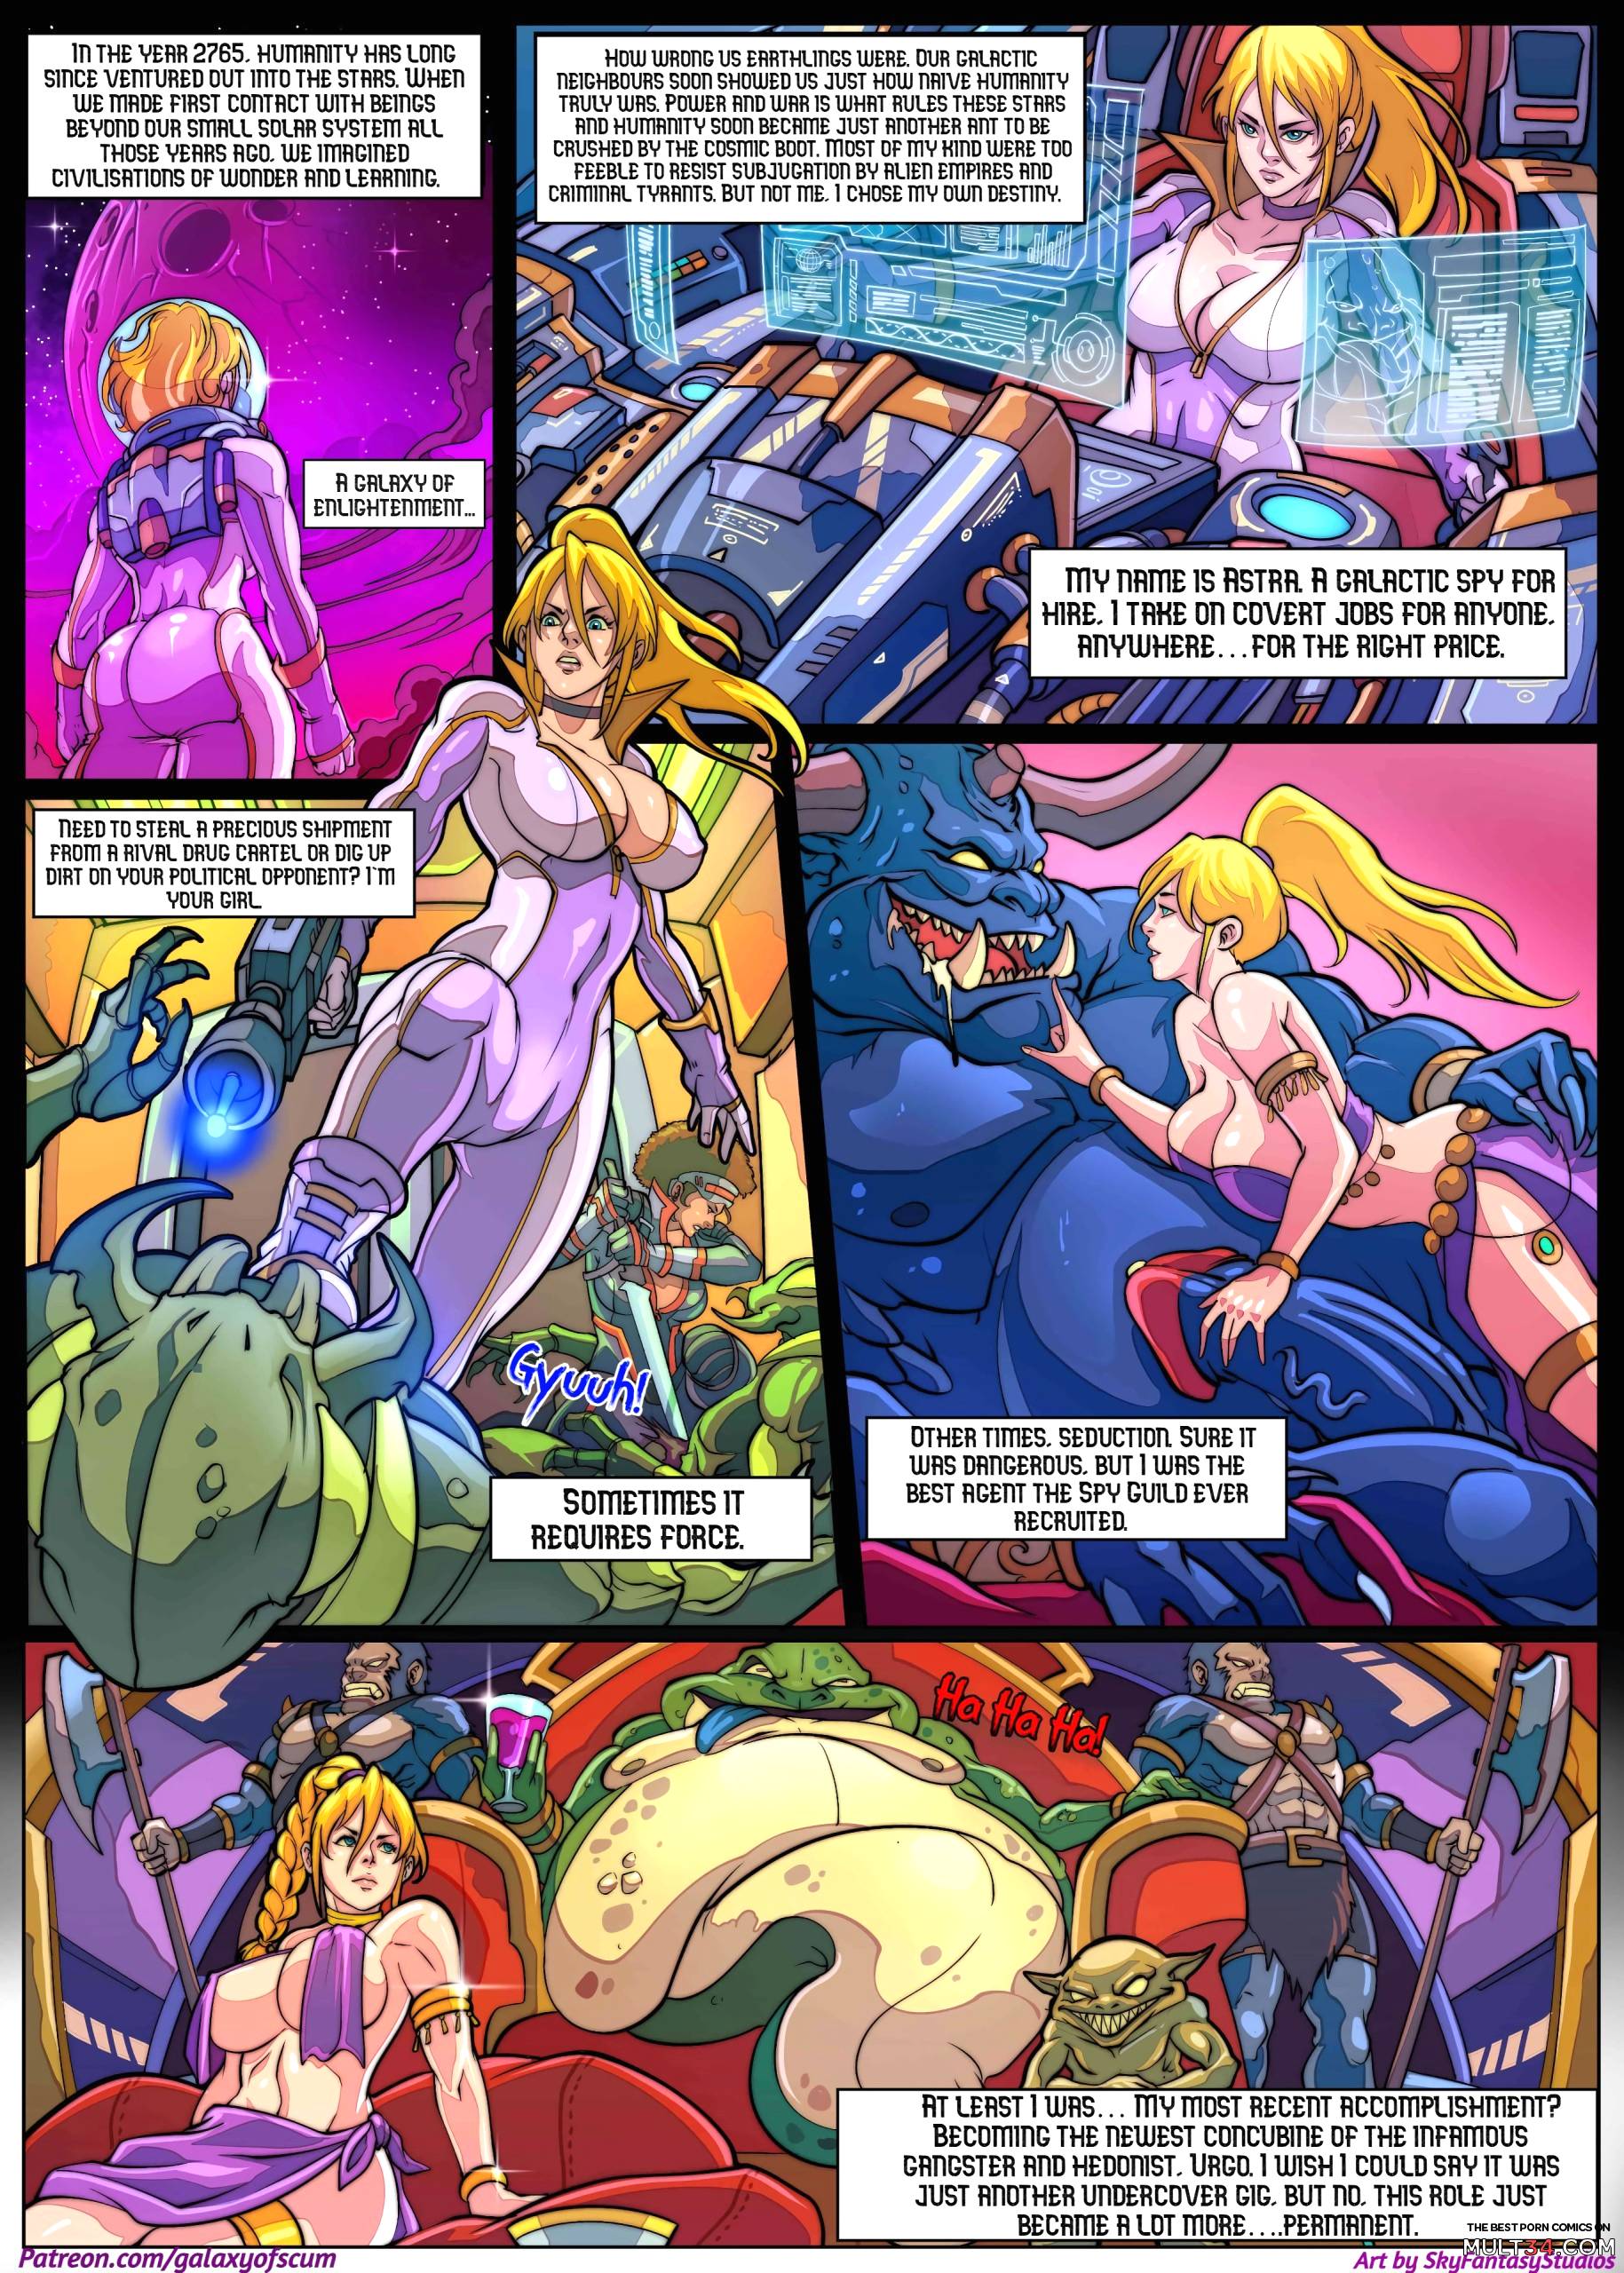 Galaxy of Scum Issue 1: Urgo's Palace page 2